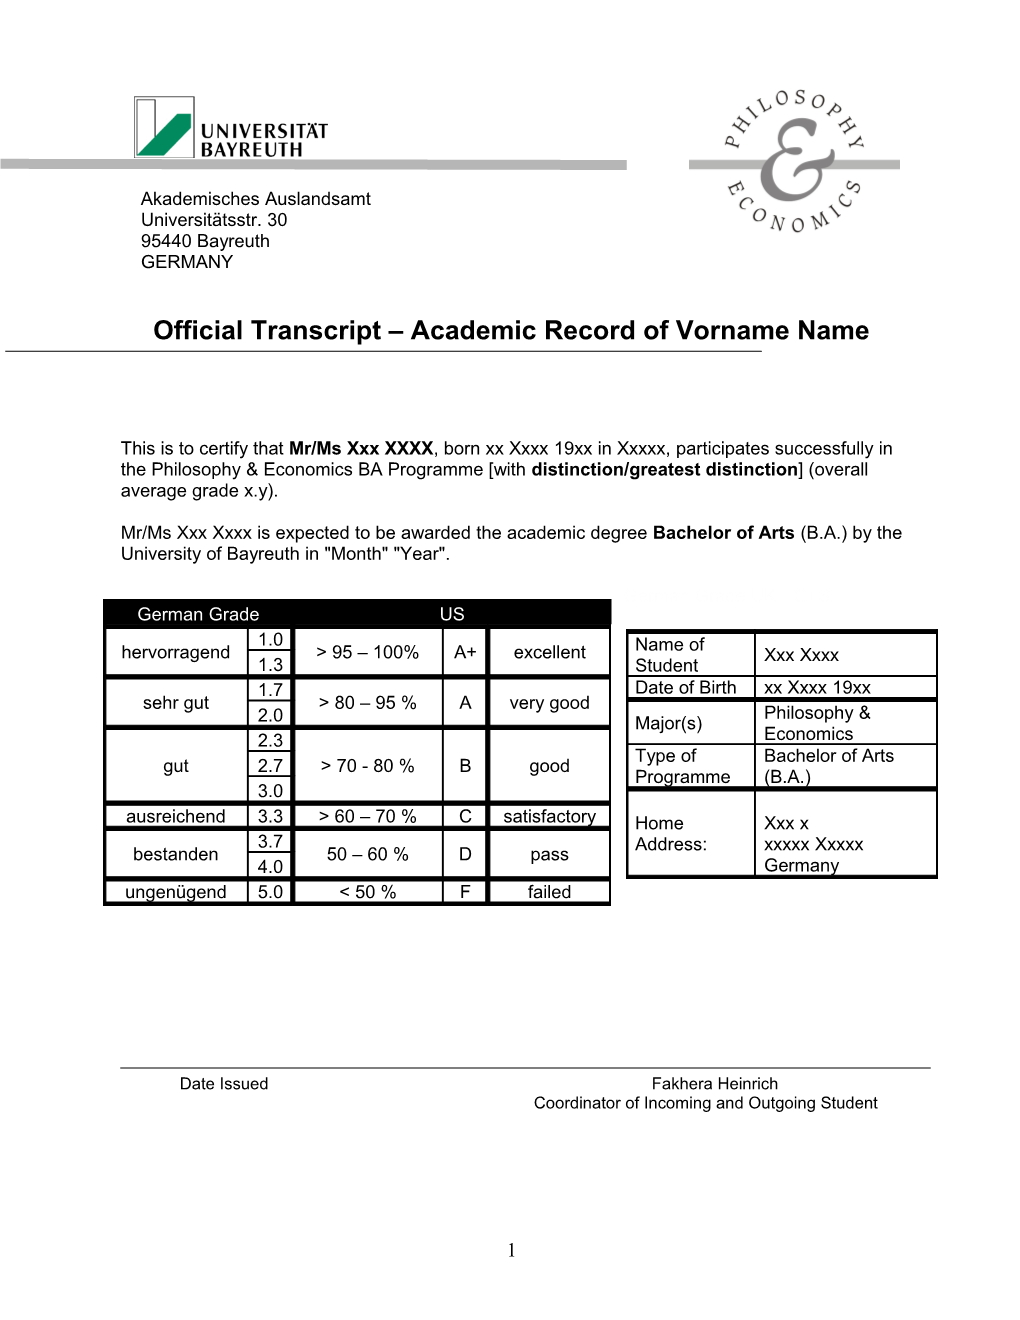 Official Transcript Academic Record of Vornamename